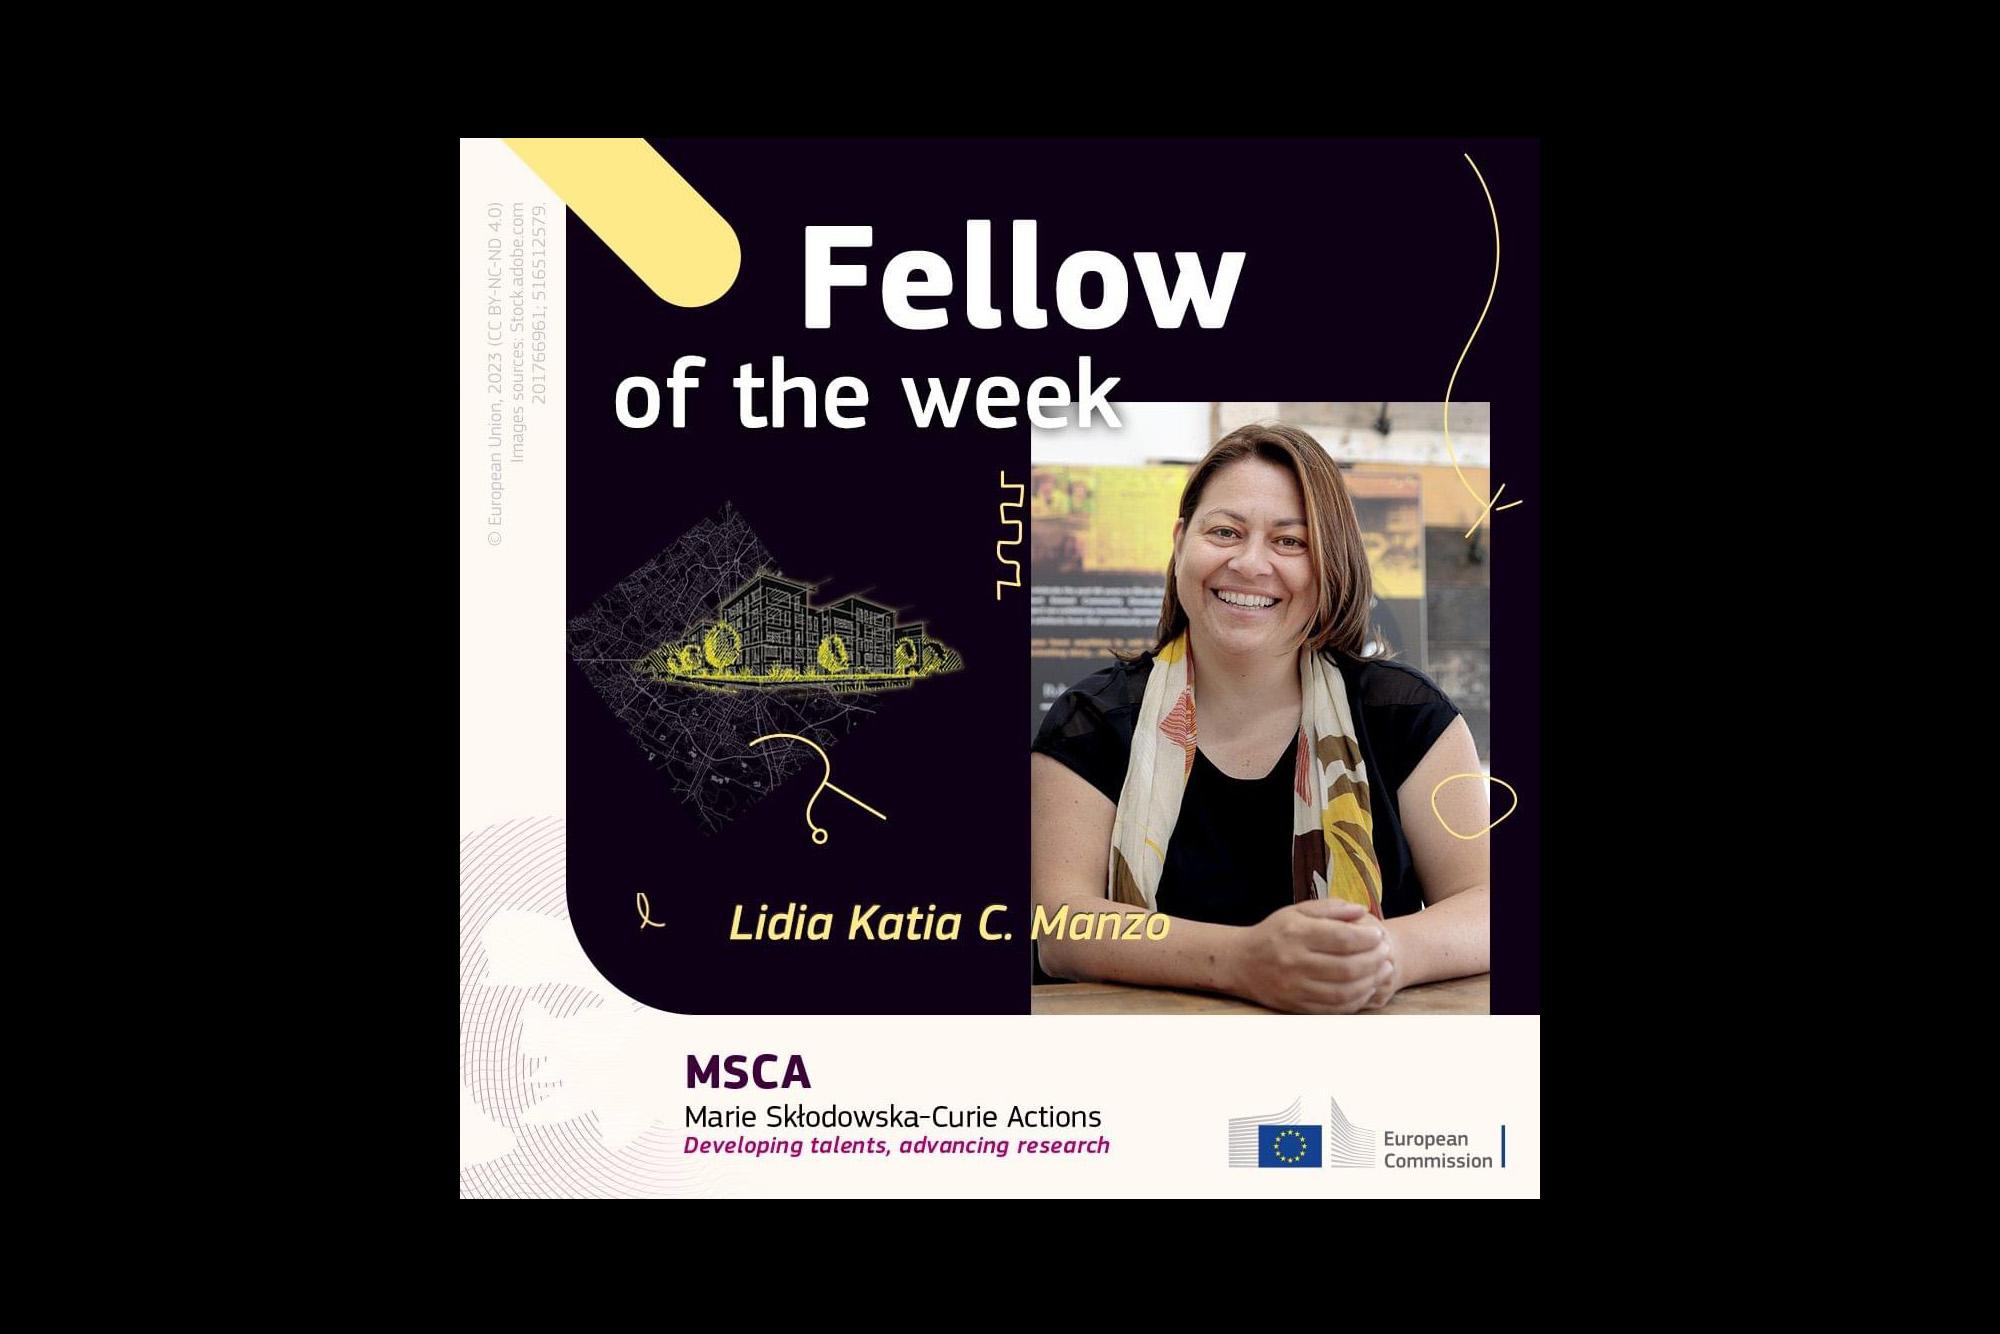 Lidia Katia C. Manzo is the EU MSCA Fellow of the Week!